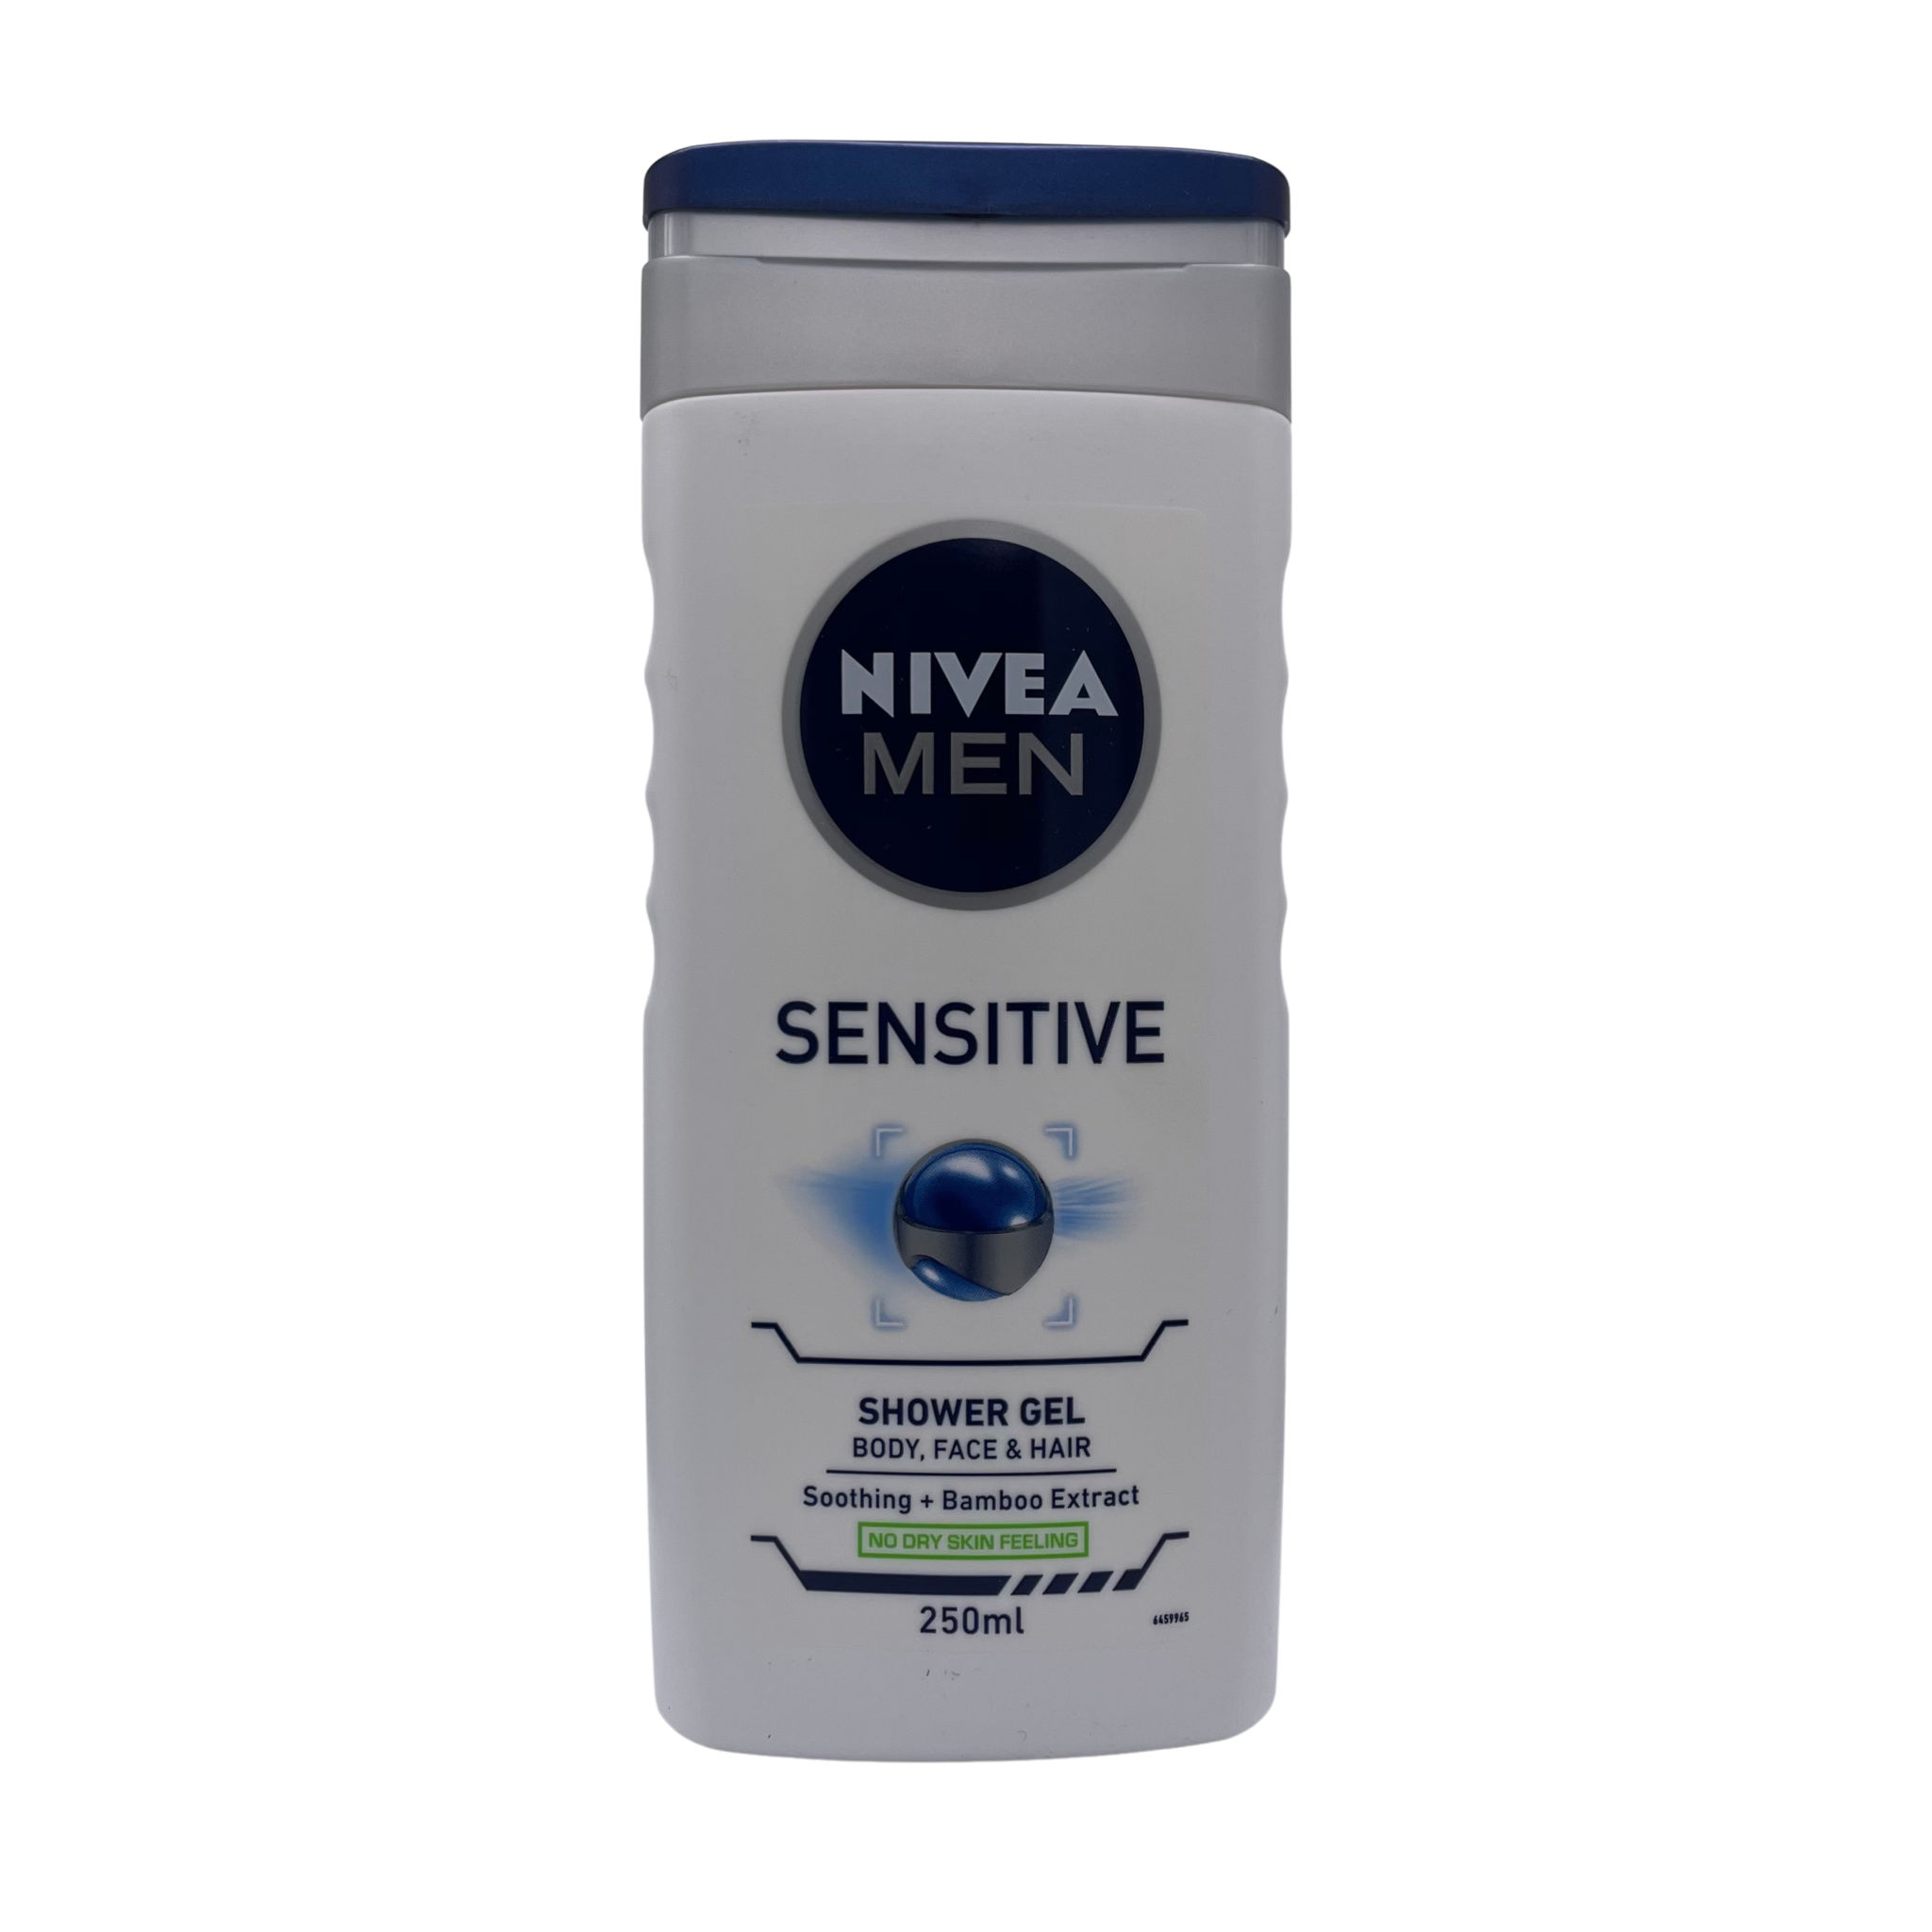 Nivea Men Sensitive showergel 250ml